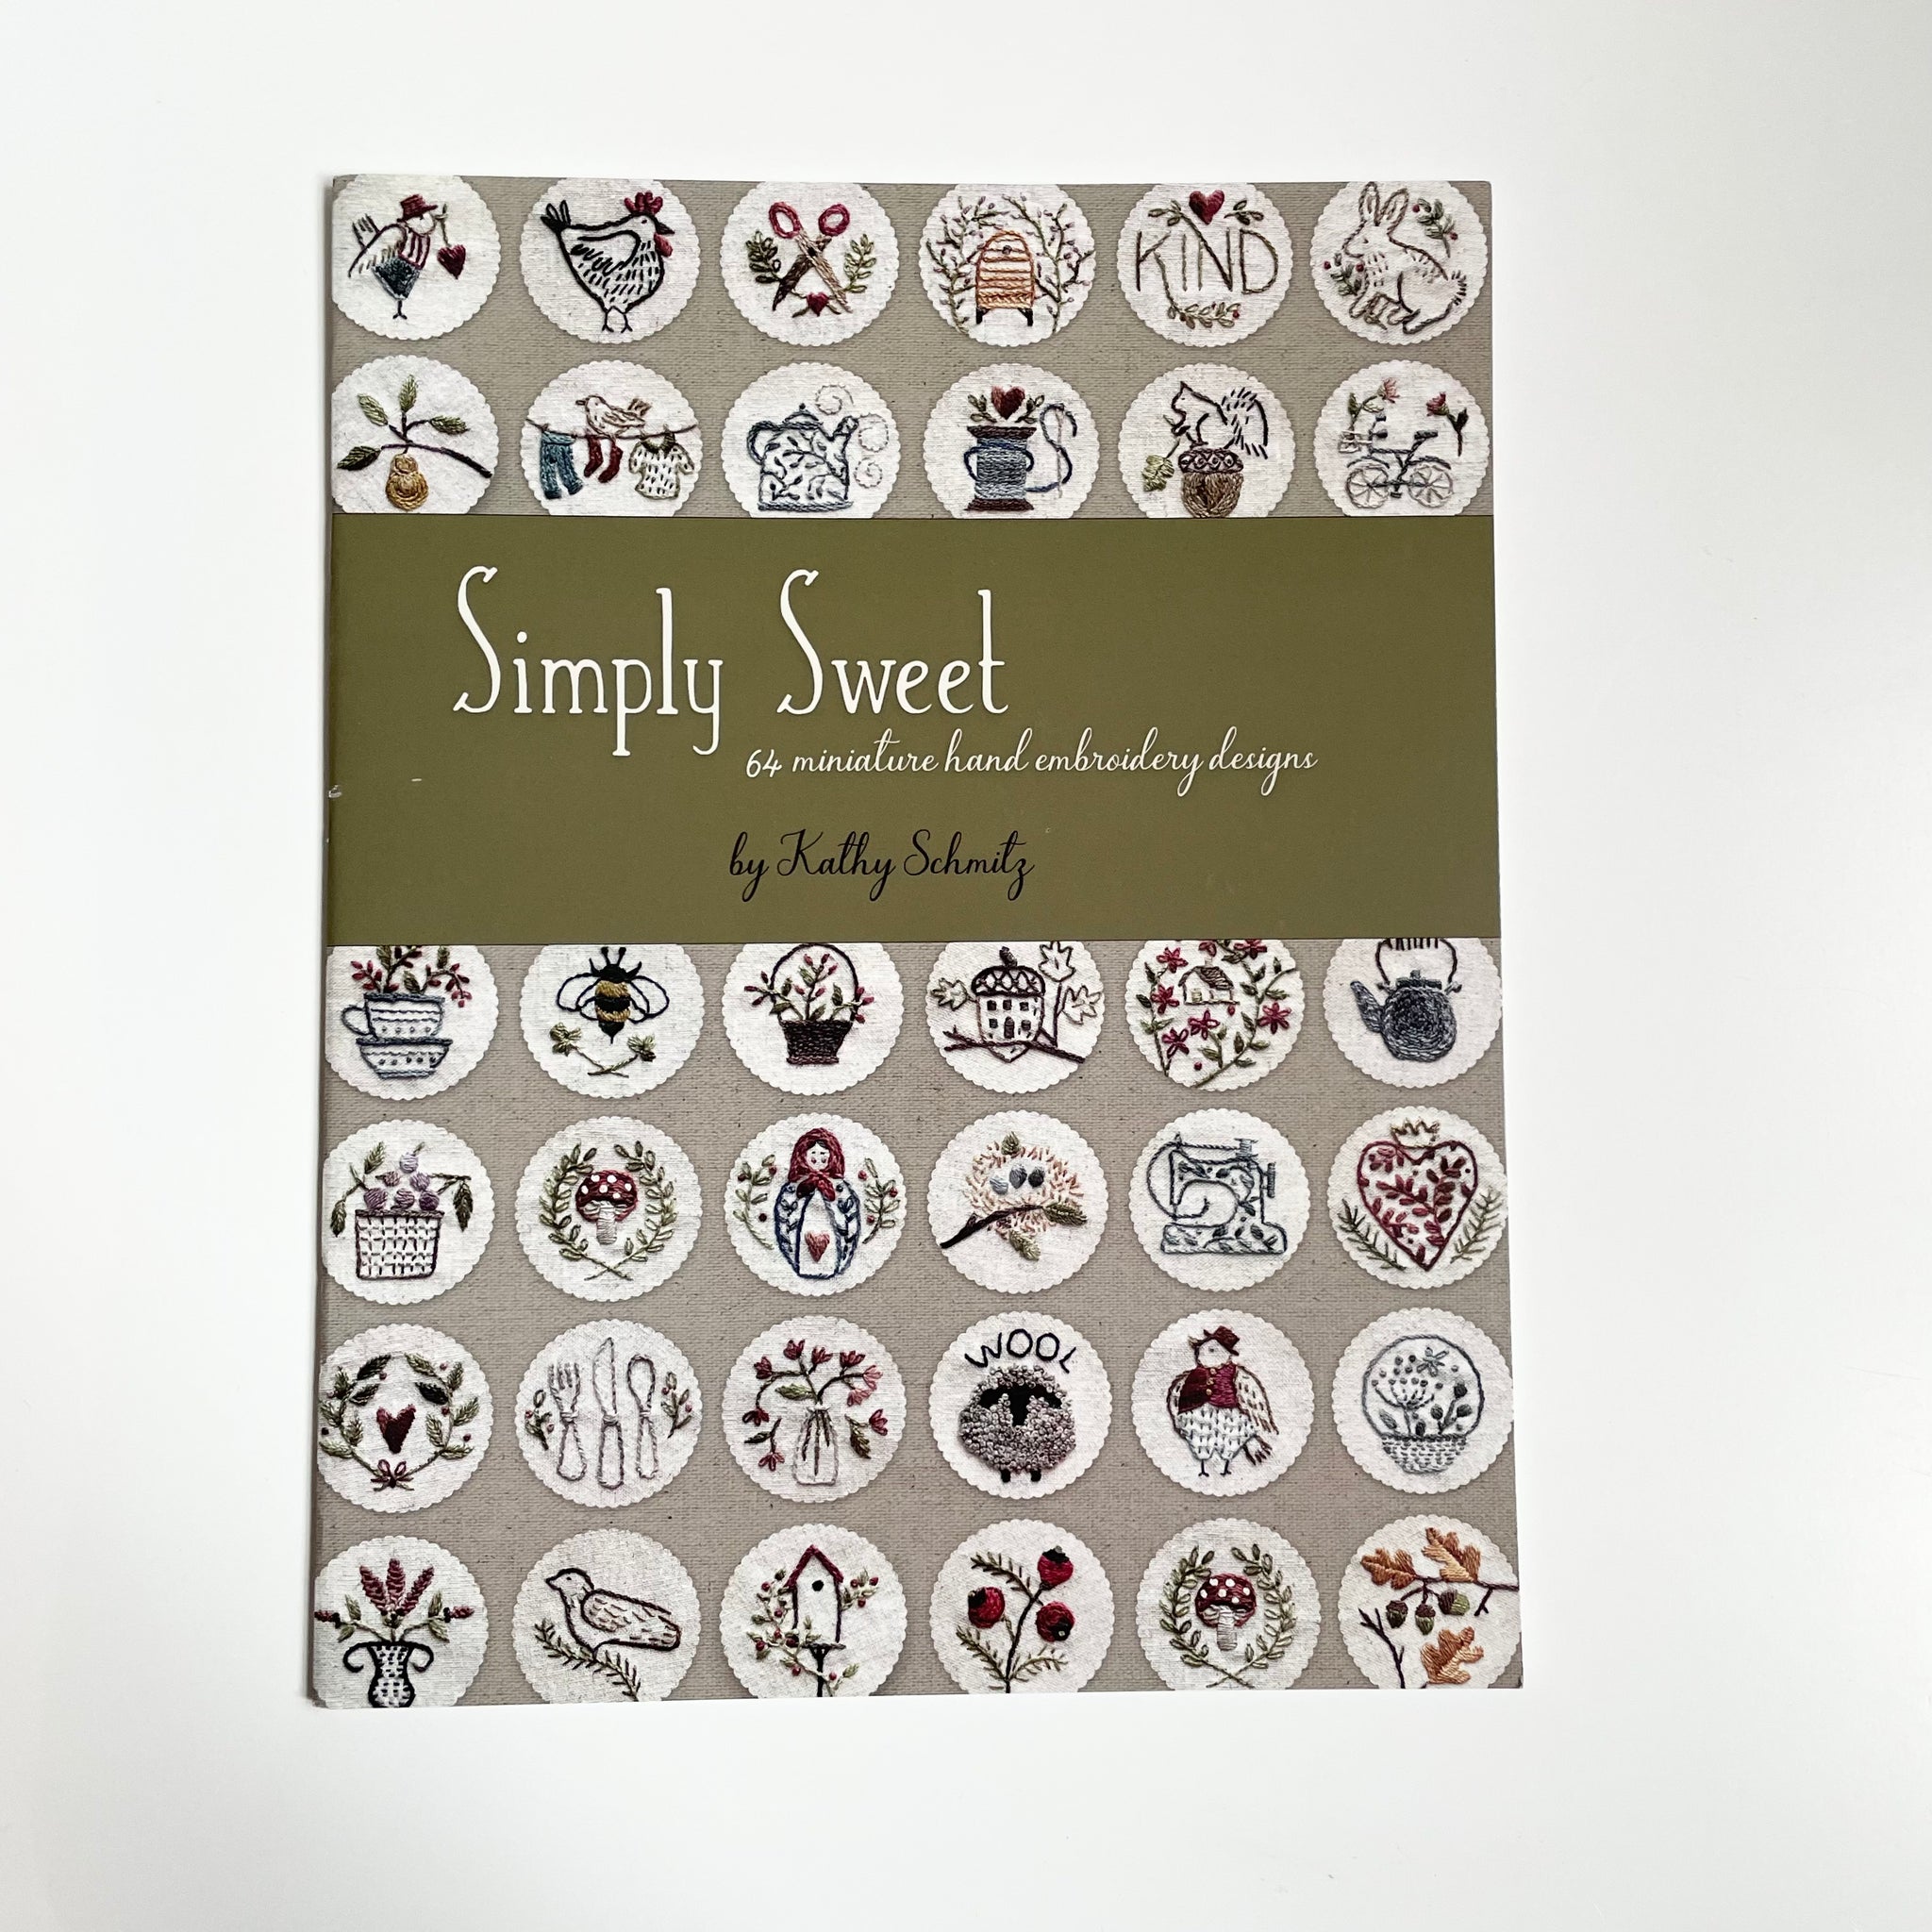 Simply Sweet - Kathy Schmitz